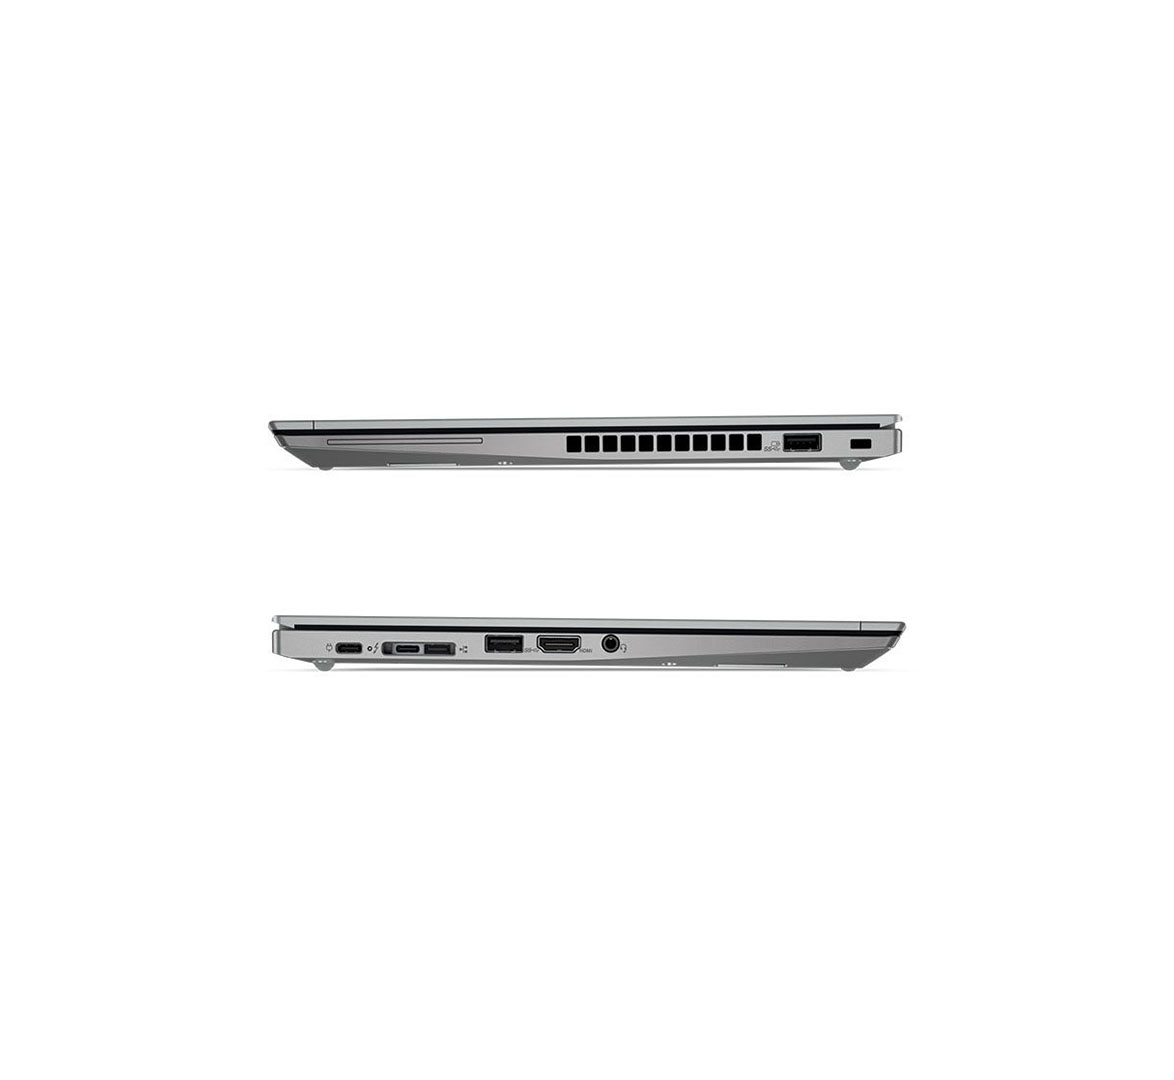 Lenovo ThinkPad T490s Business Laptop, Intel Core i5-8th Generation CPU, 8GB RAM, 256GB SSD, 14 inch Touchscreen, Windows 10 Pro